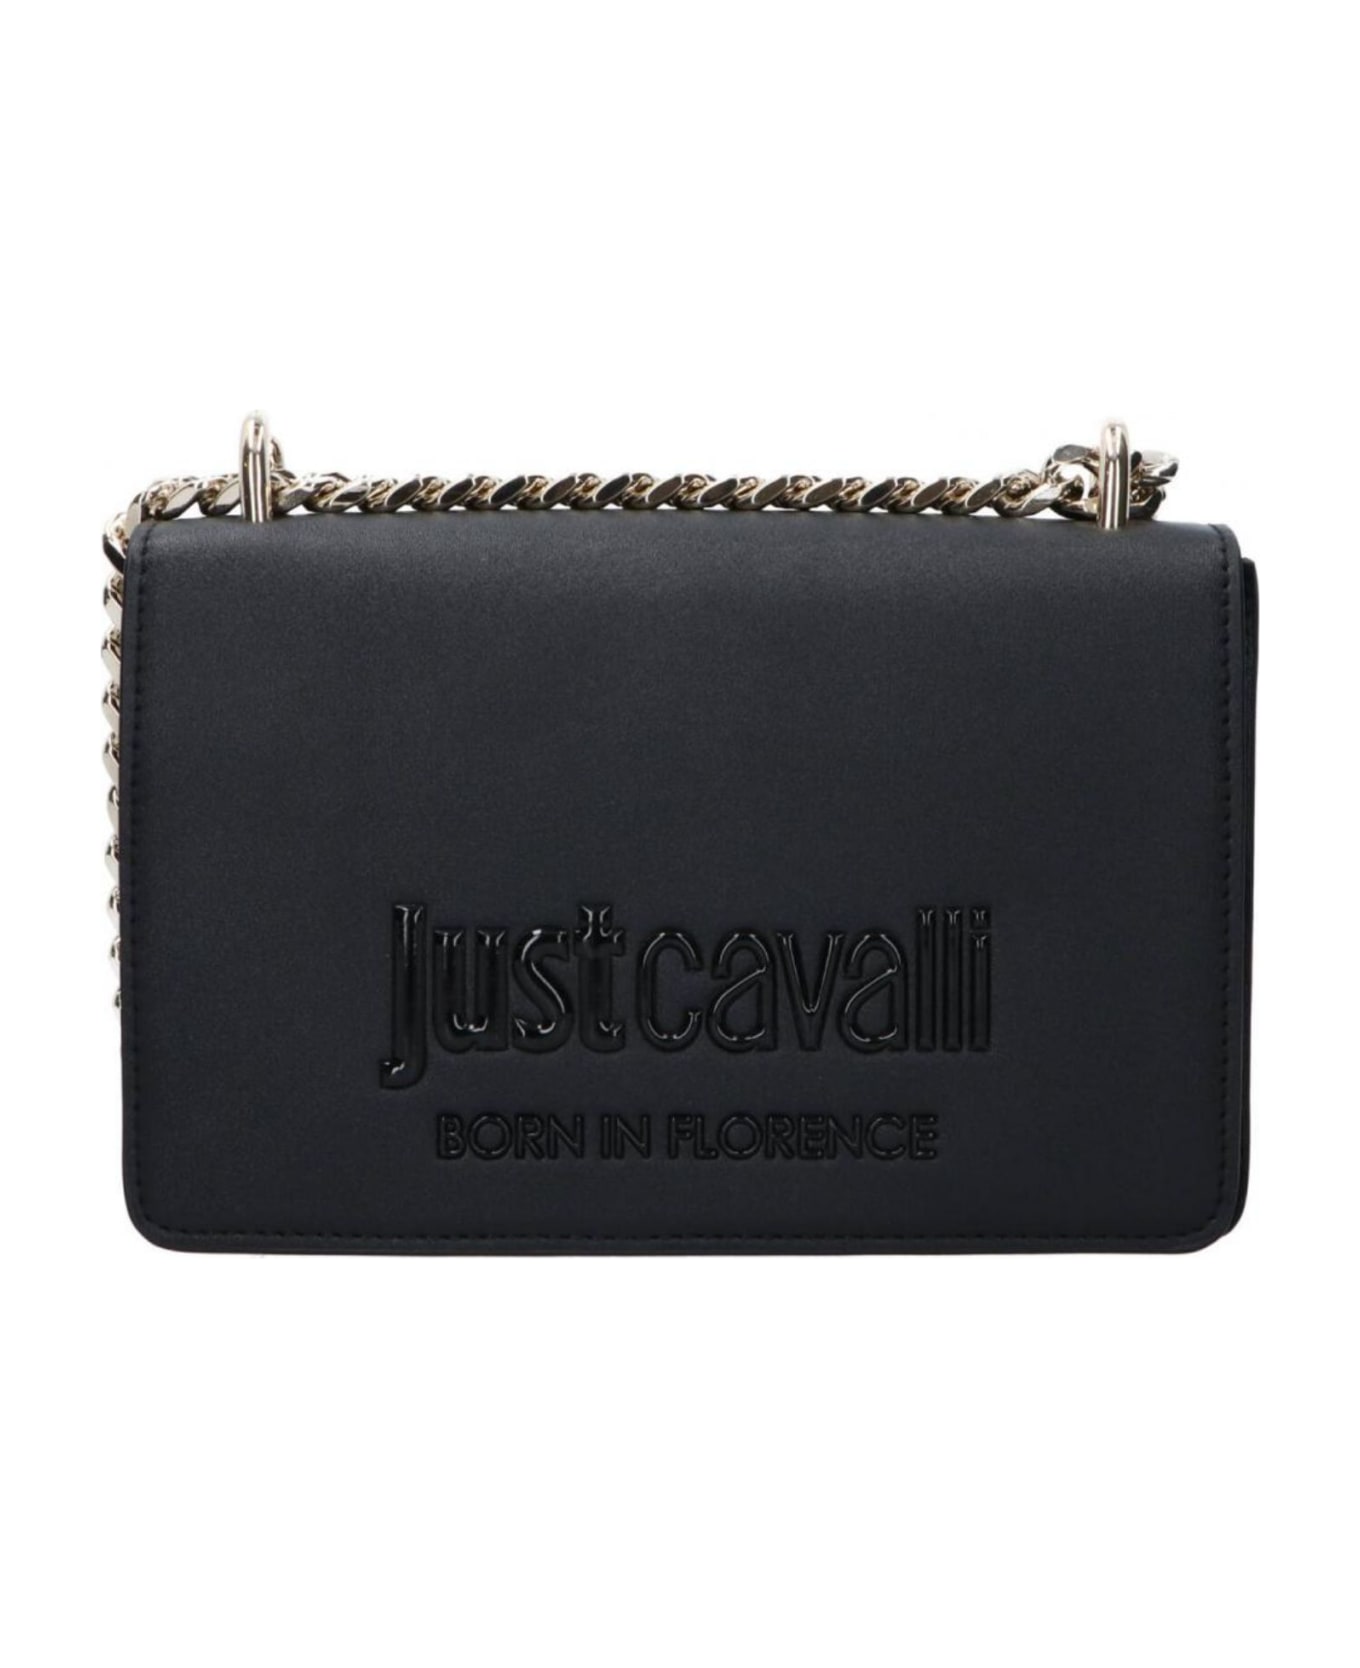 Just Cavalli Bag - Black